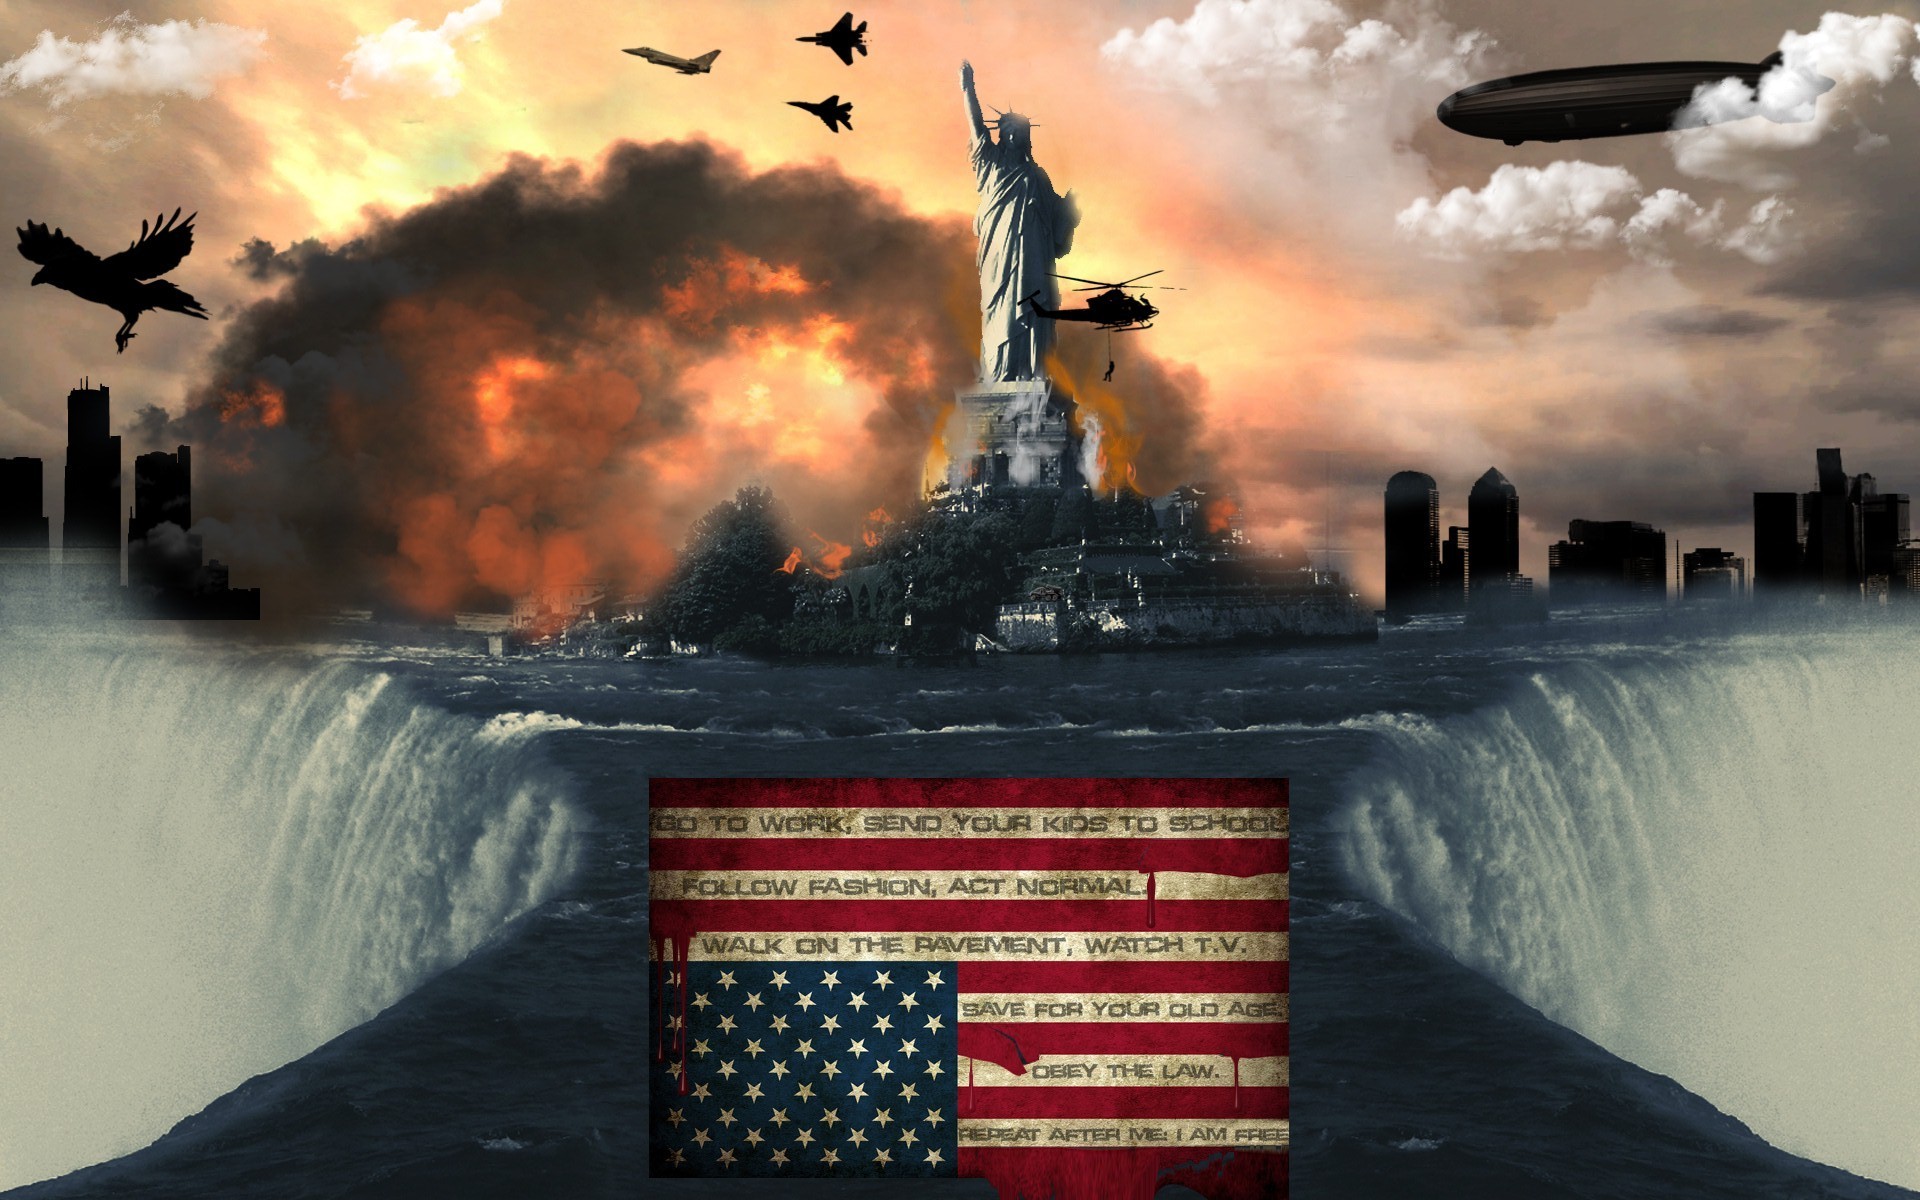 General 1920x1200 Statue of Liberty American flag explosion waterfall USA digital art